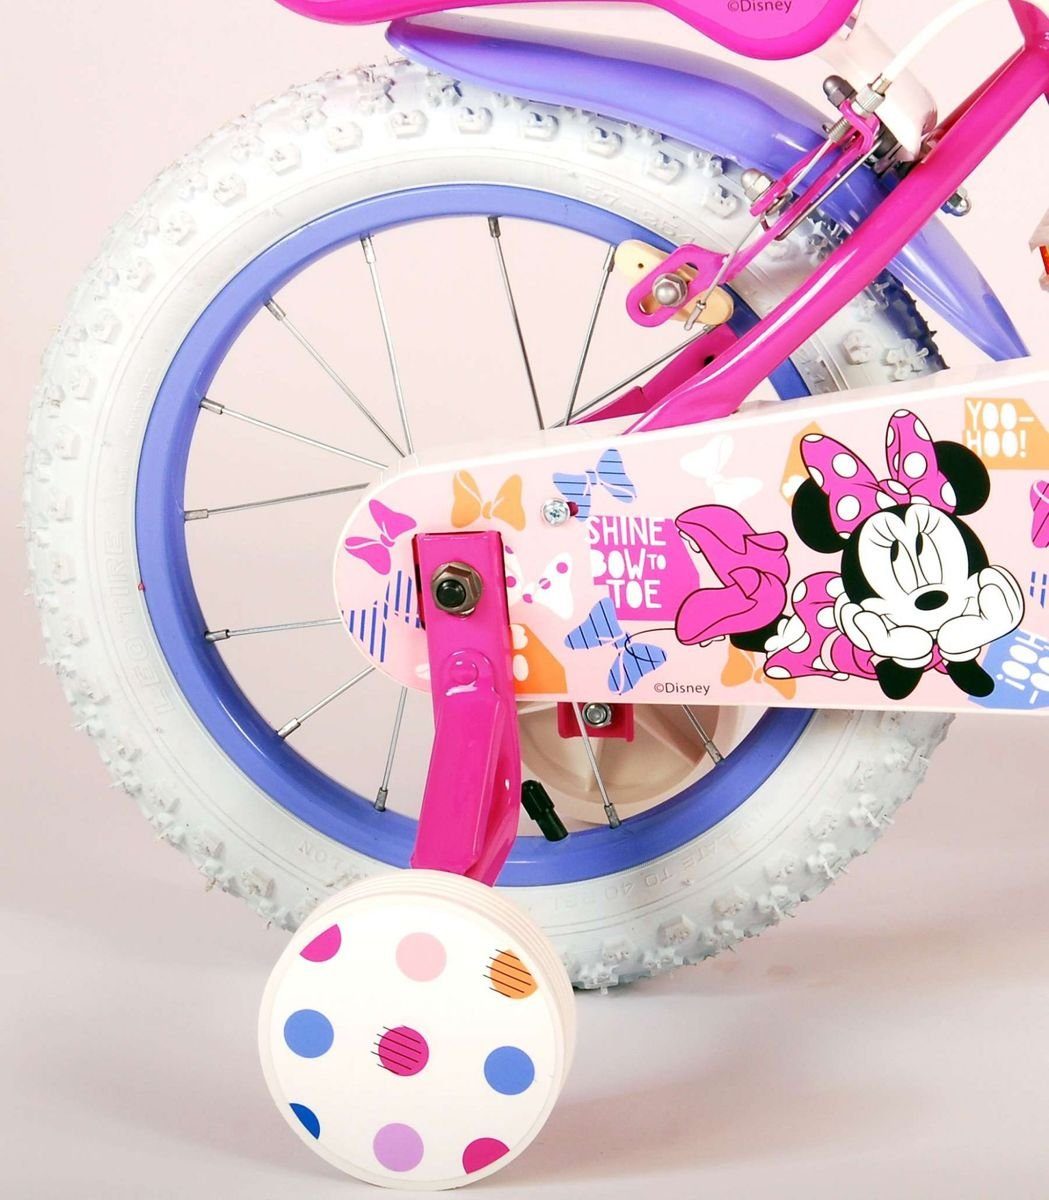 Rad Kinder Zoll Disney Stützräder Korb, Bike Puppensitz, 14 21436CHIT, 1 Mädchenfahrrad Fahrrad Kinderfahrrad Minnie Gang, Volare